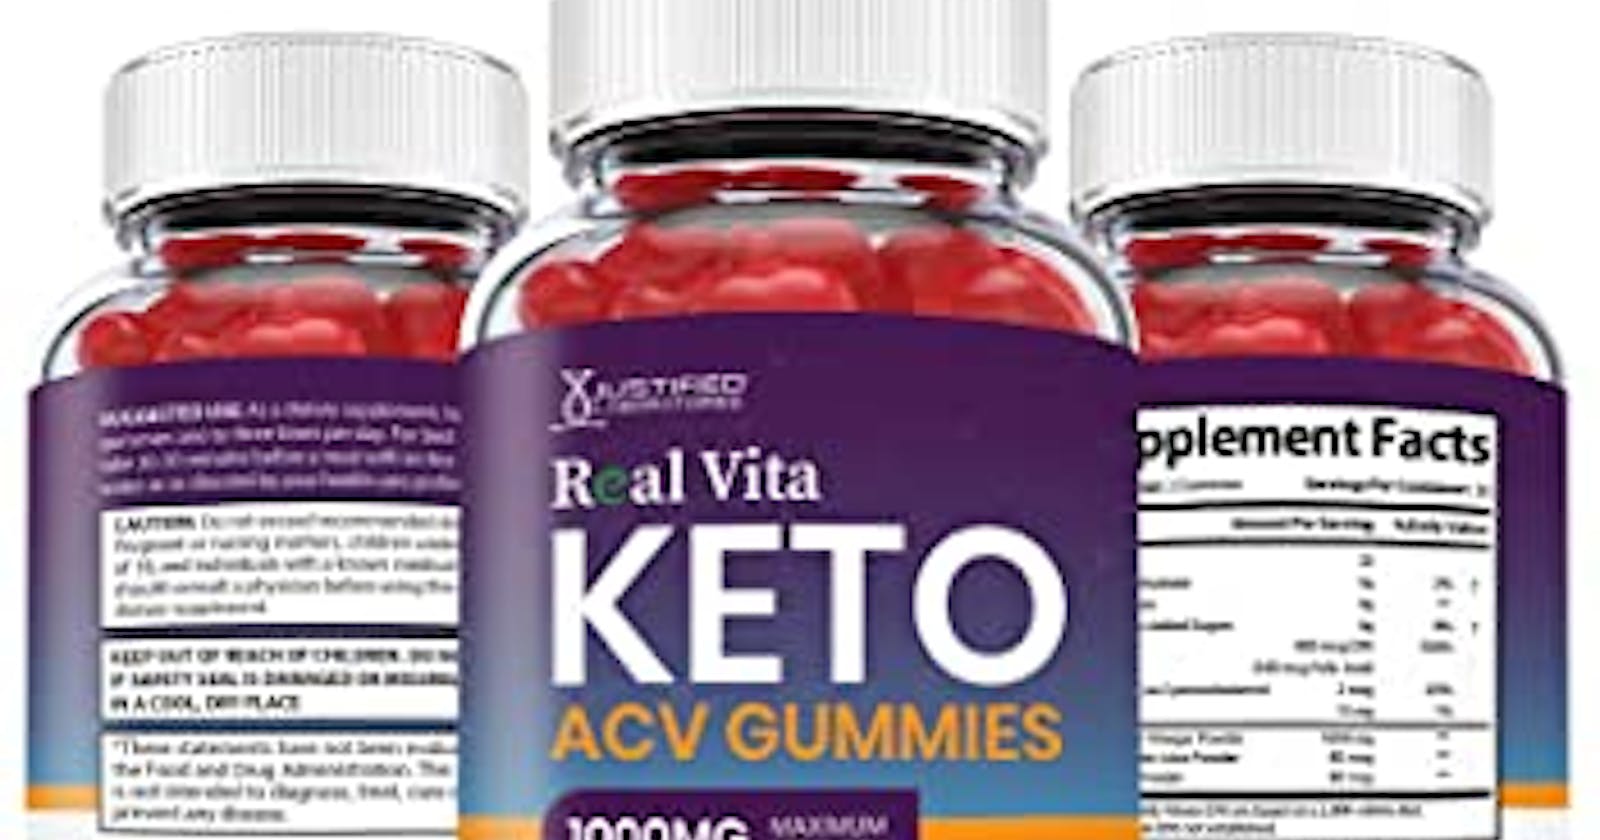 Real Vita Gummies Supplement